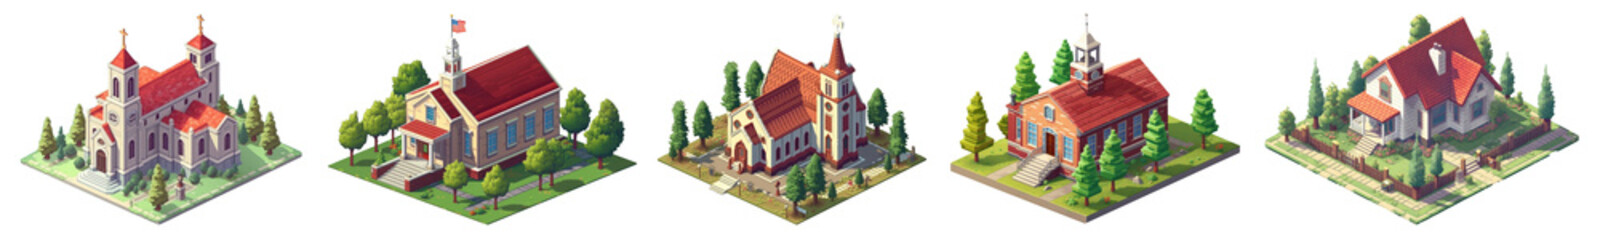 Poster - church isometric architecture illustration set